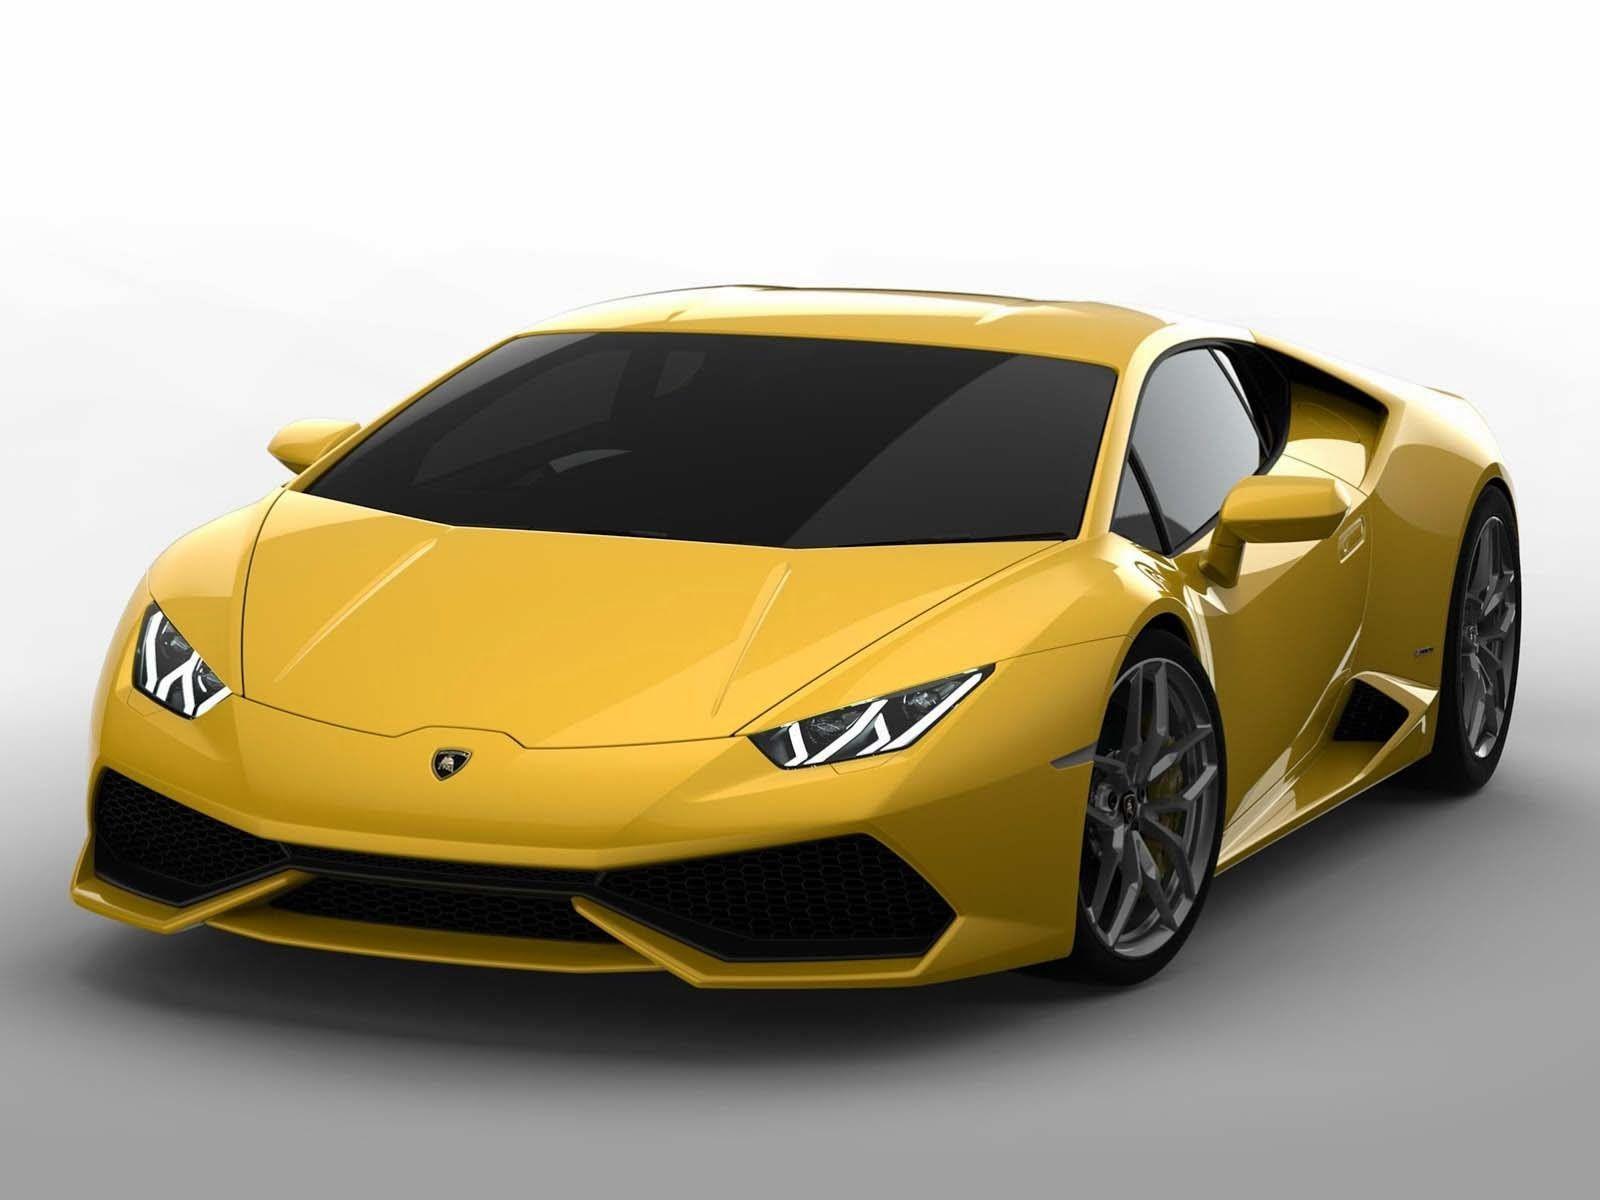 Lamborghini Gallardo Bicolore Car Insurance